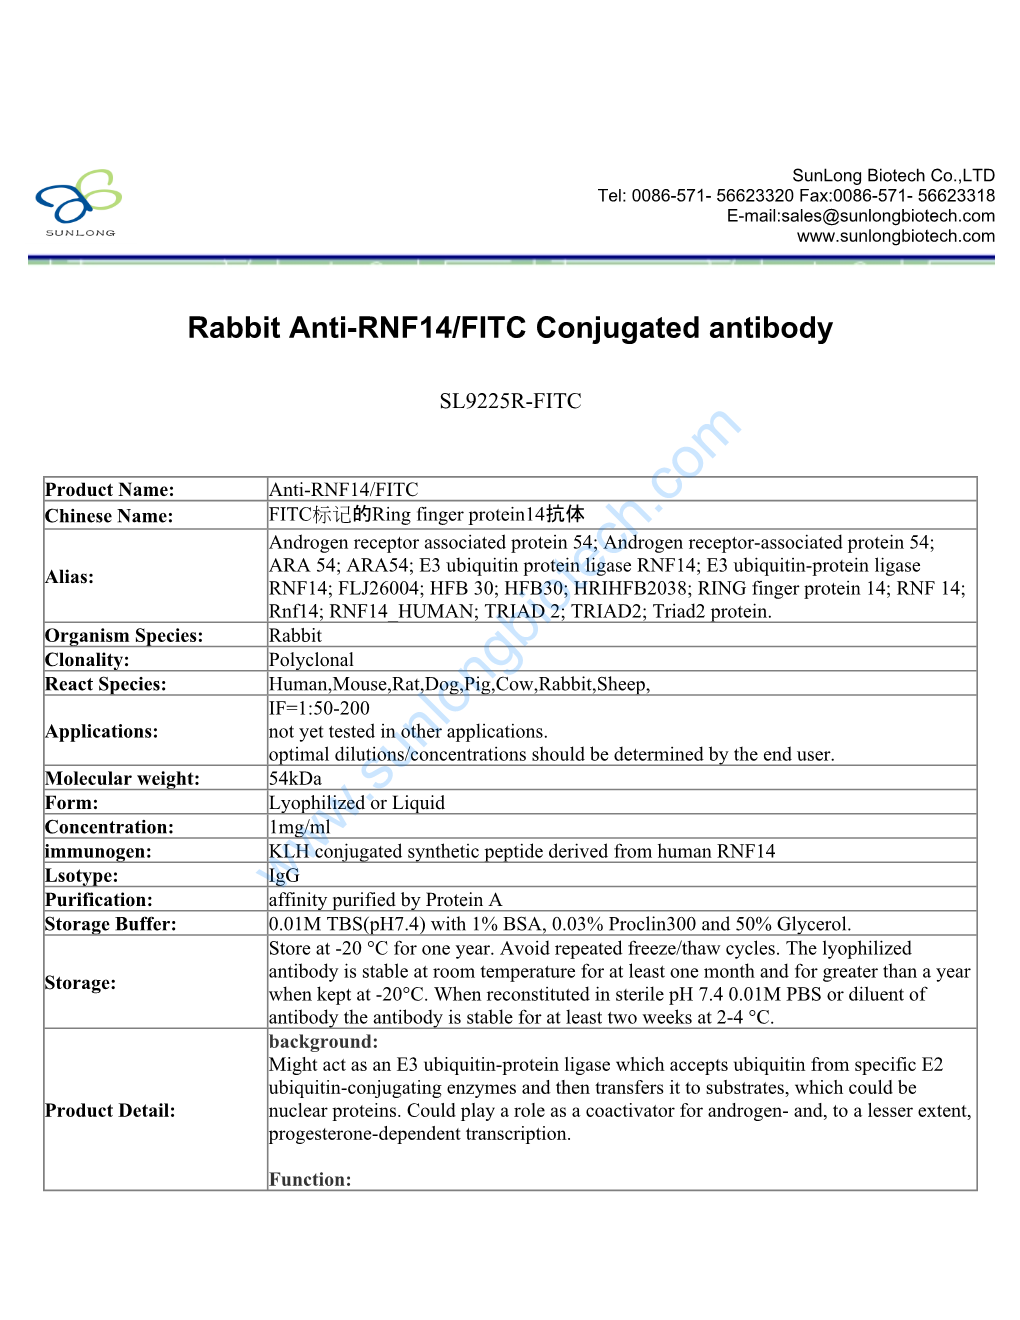 Rabbit Anti-RNF14/FITC Conjugated Antibody